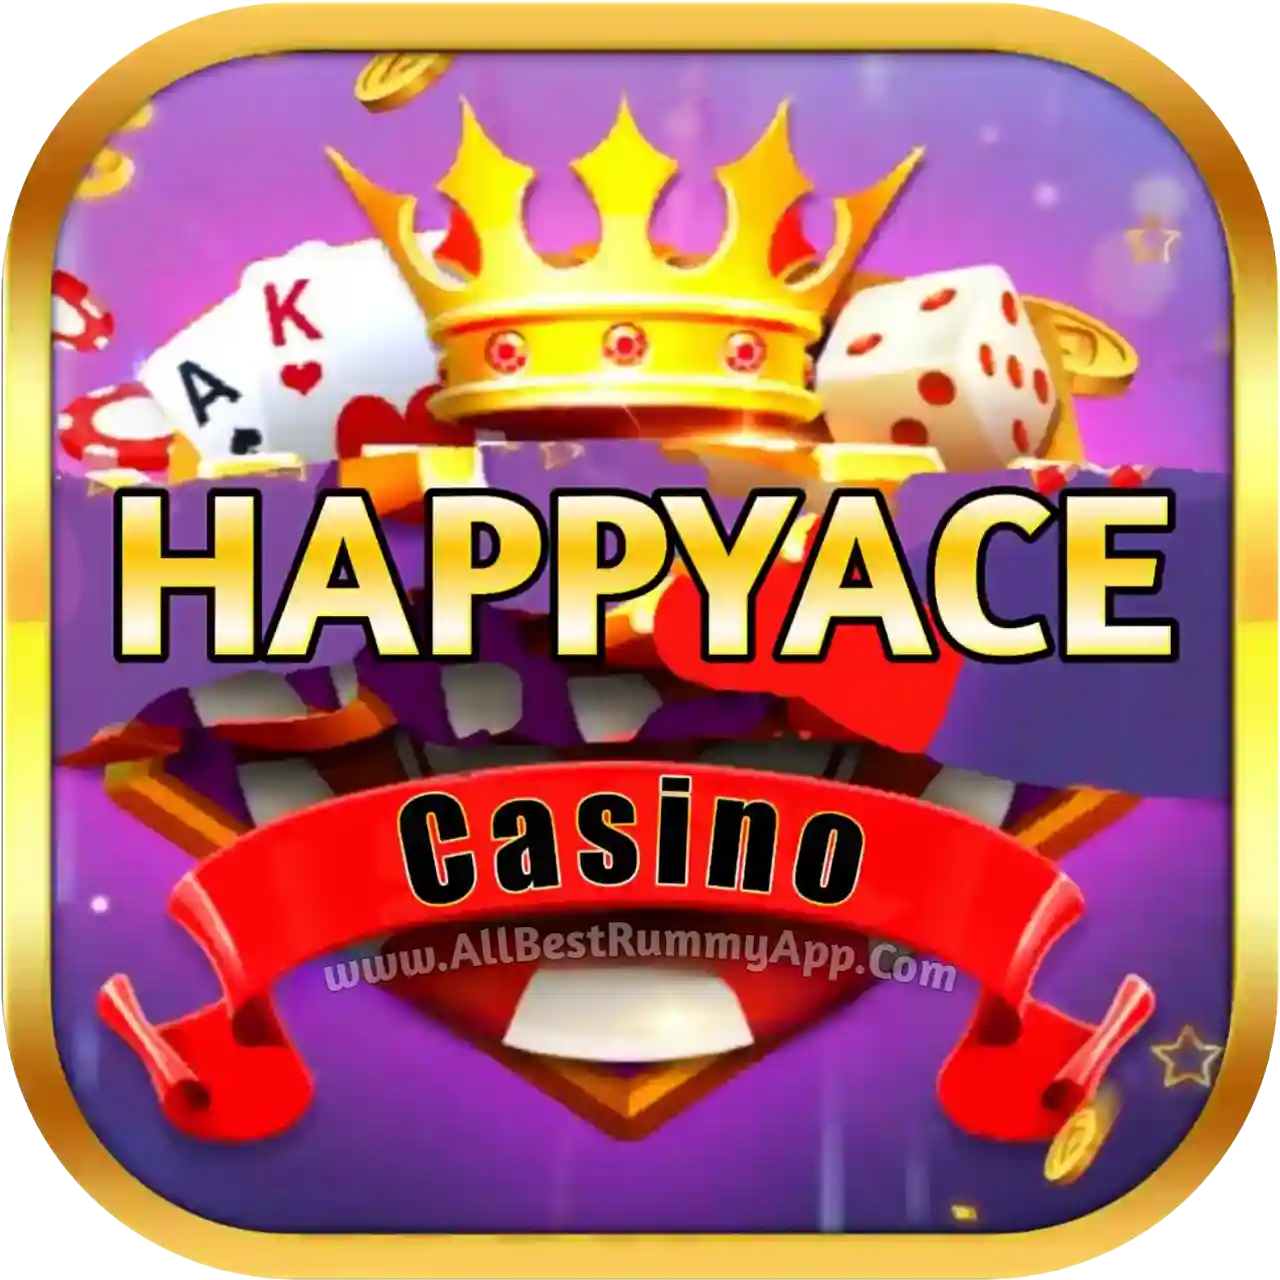 Happy Ace Casino - India Rummy APk